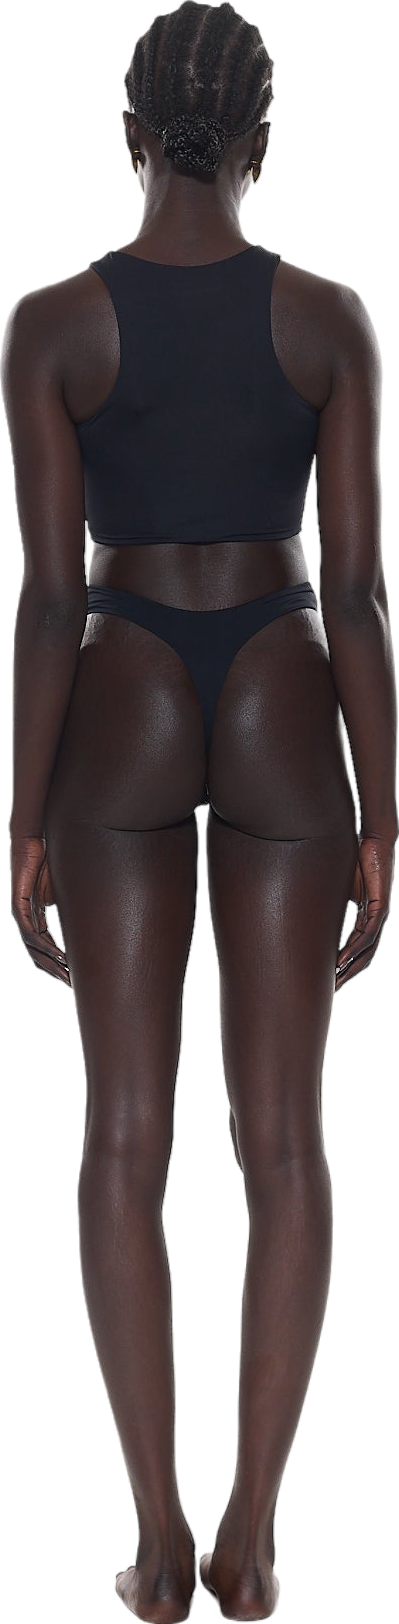 Myra Swimwear Black Russo Top And Yris Bottoms UK S